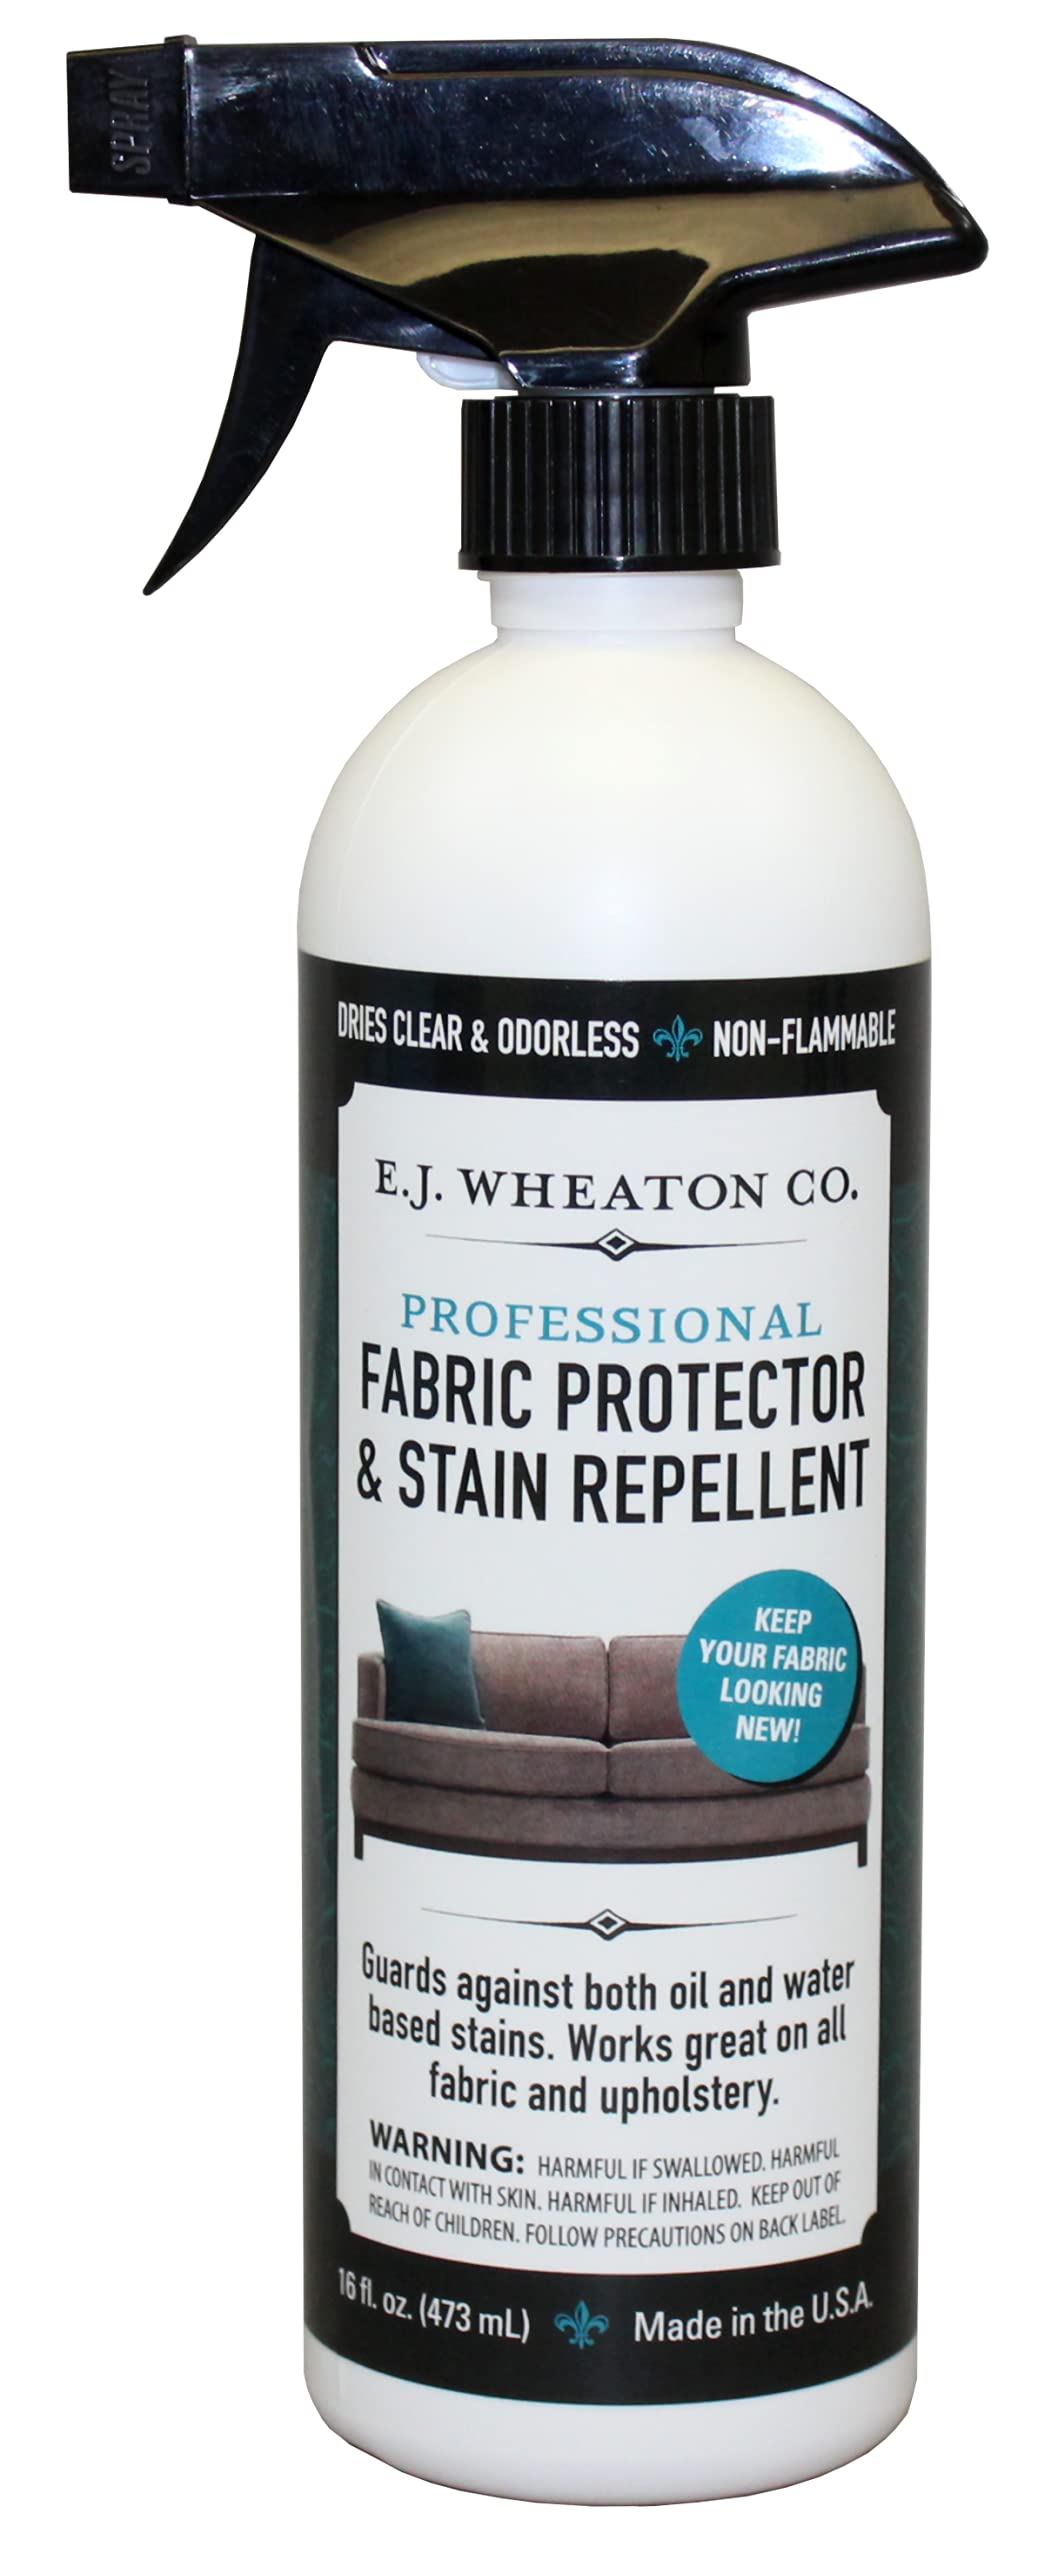 How Do Fabric Protector Sprays Maintain Carpets & Upholstery